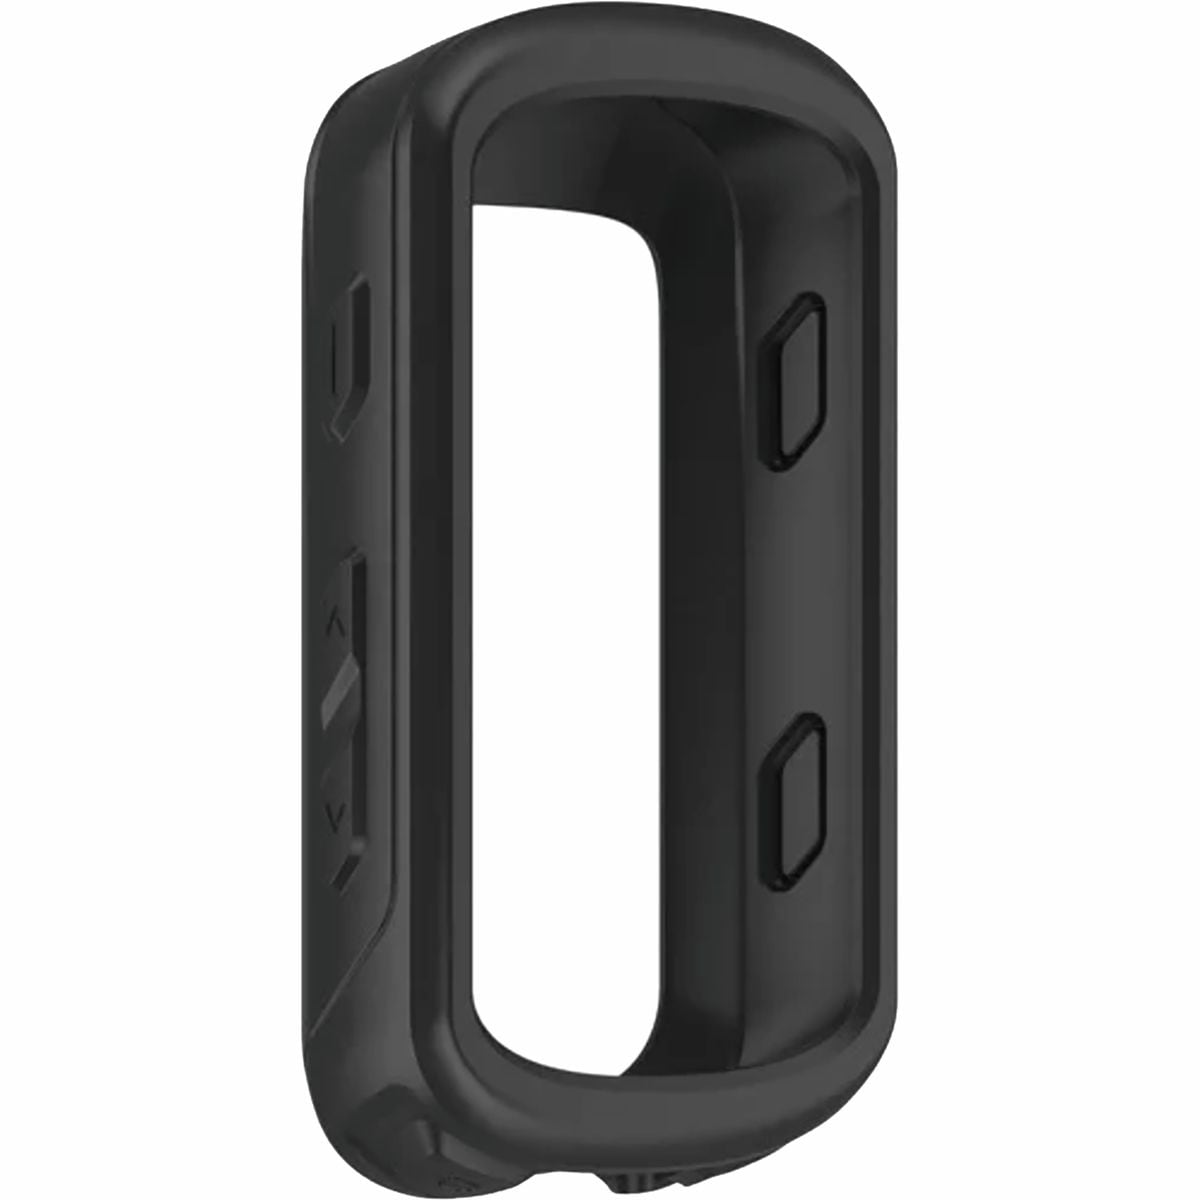 Silicone Case Protective Cover Shell for Garmin Edge 530 GPS Bike Computer Parts 